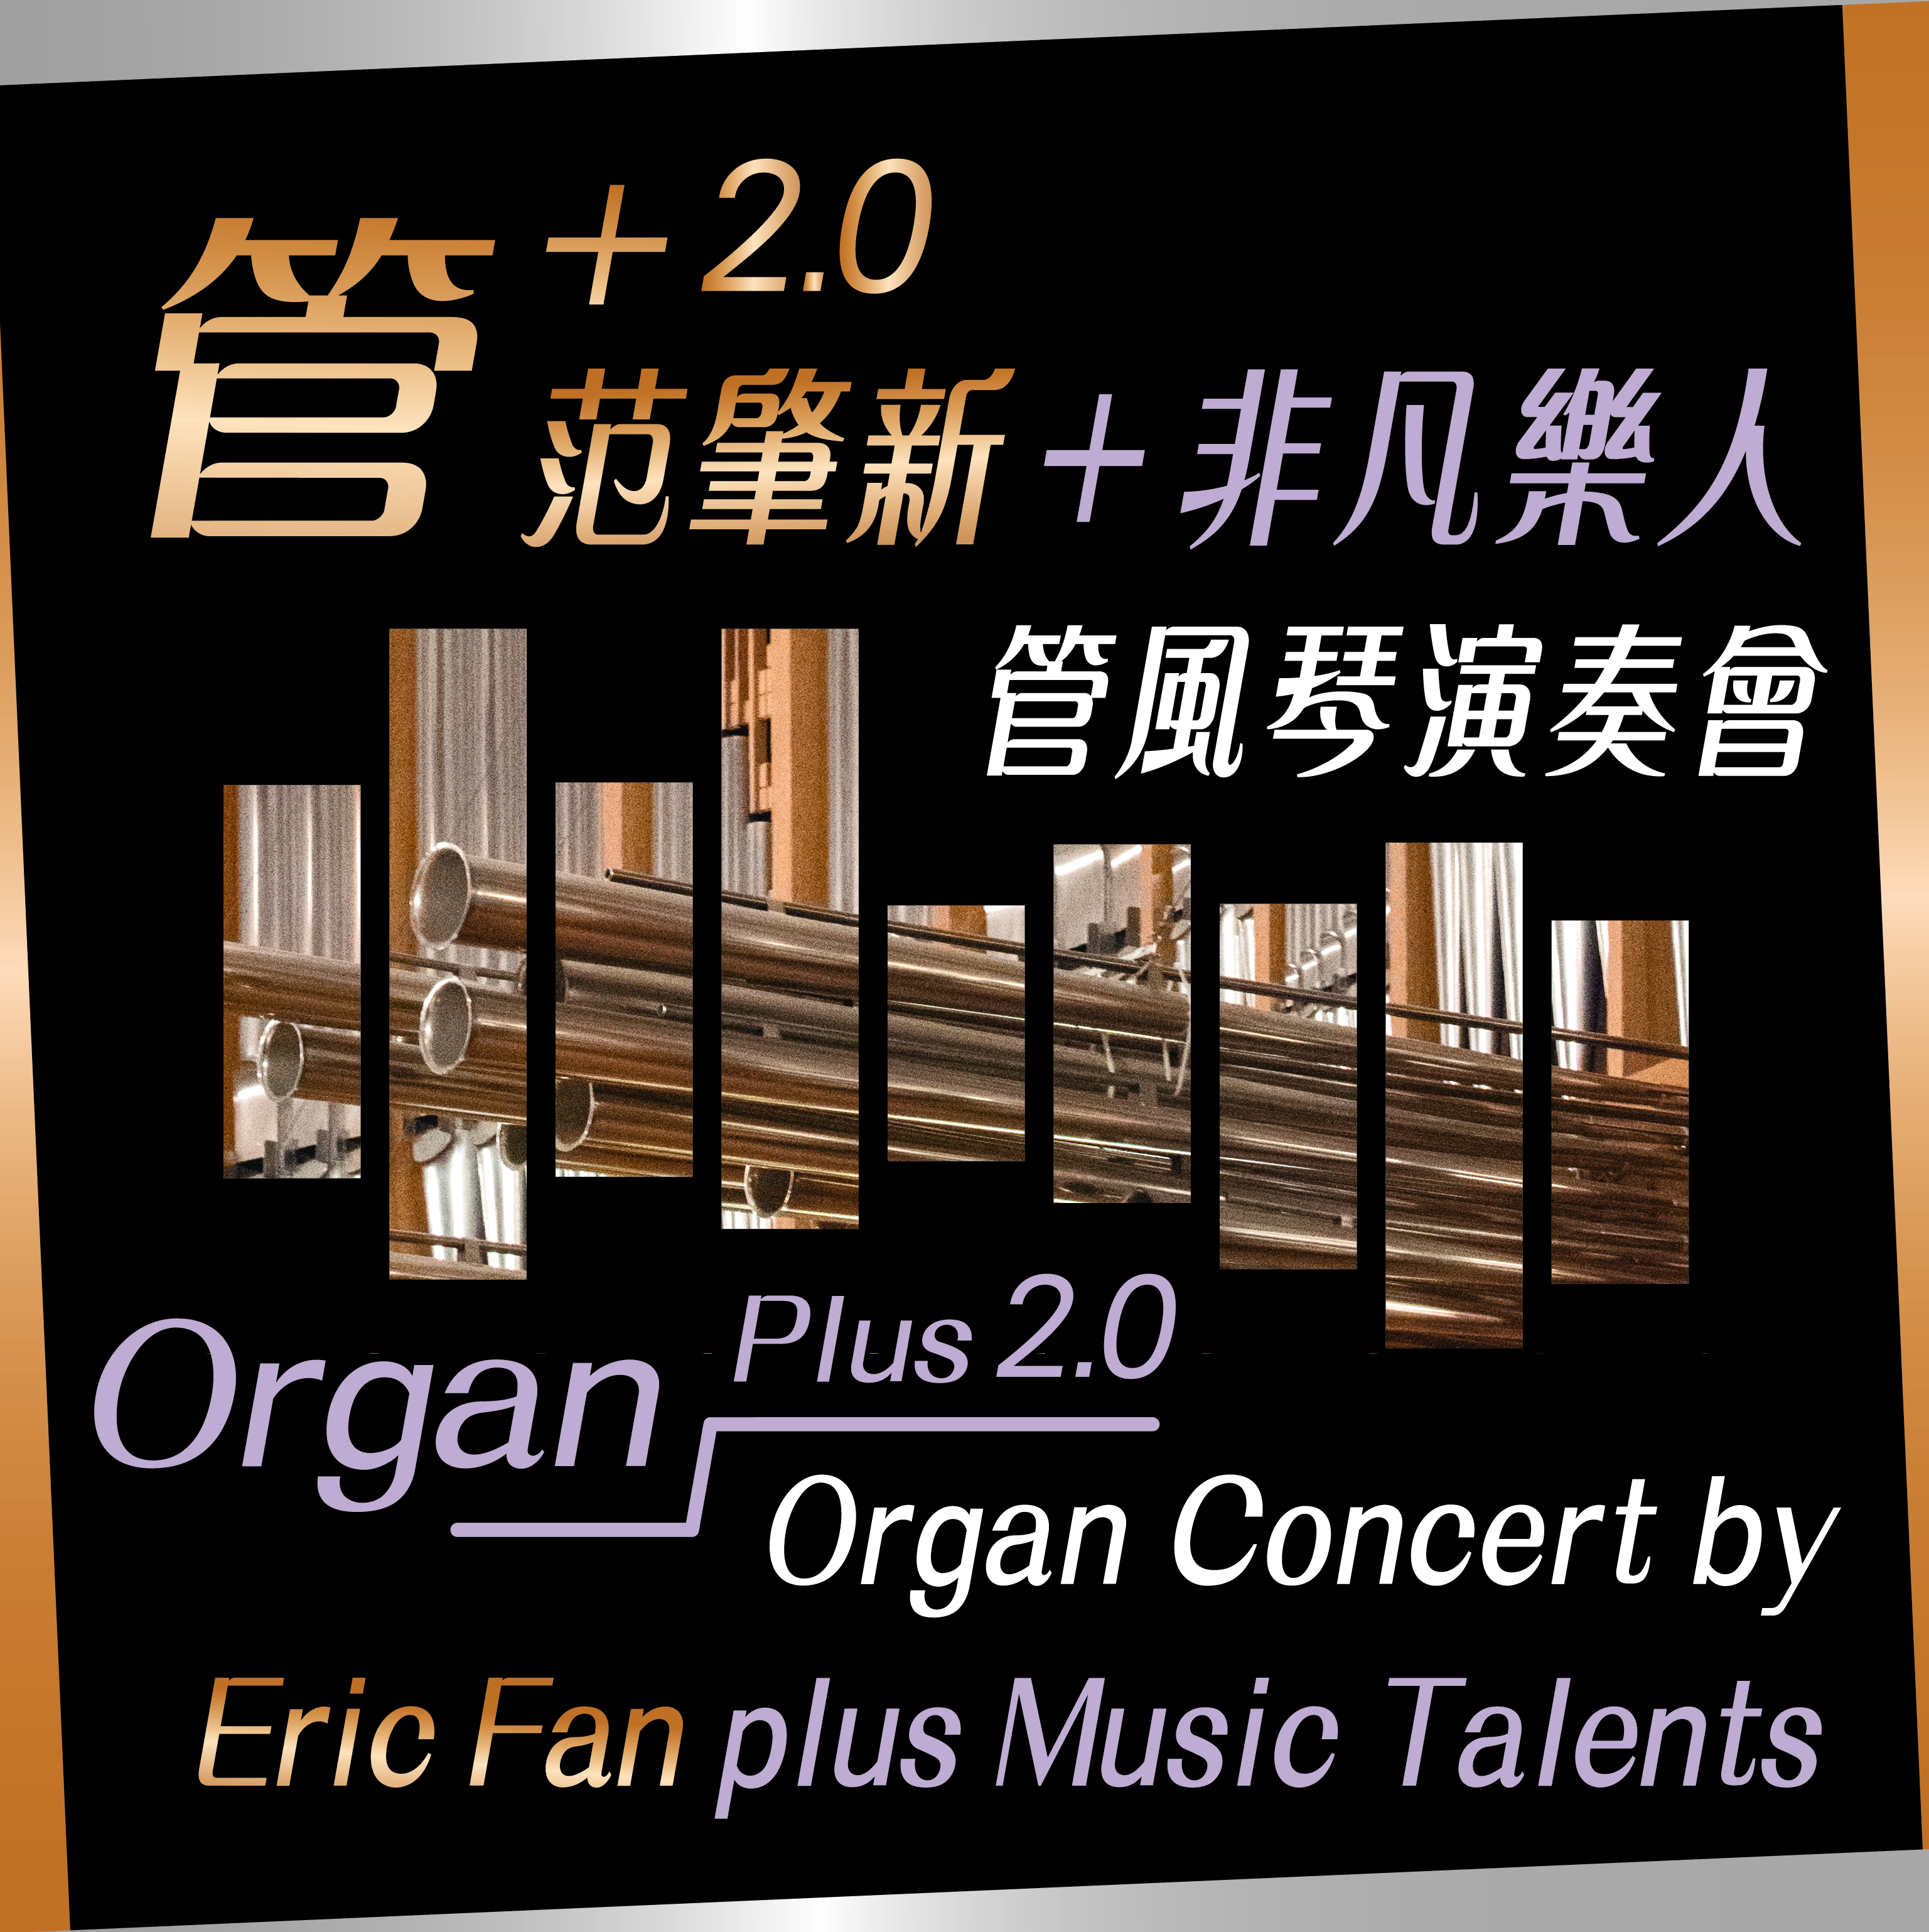 Organ Plus 2.0 Organ Concert by Eric Fan plus Music Talents